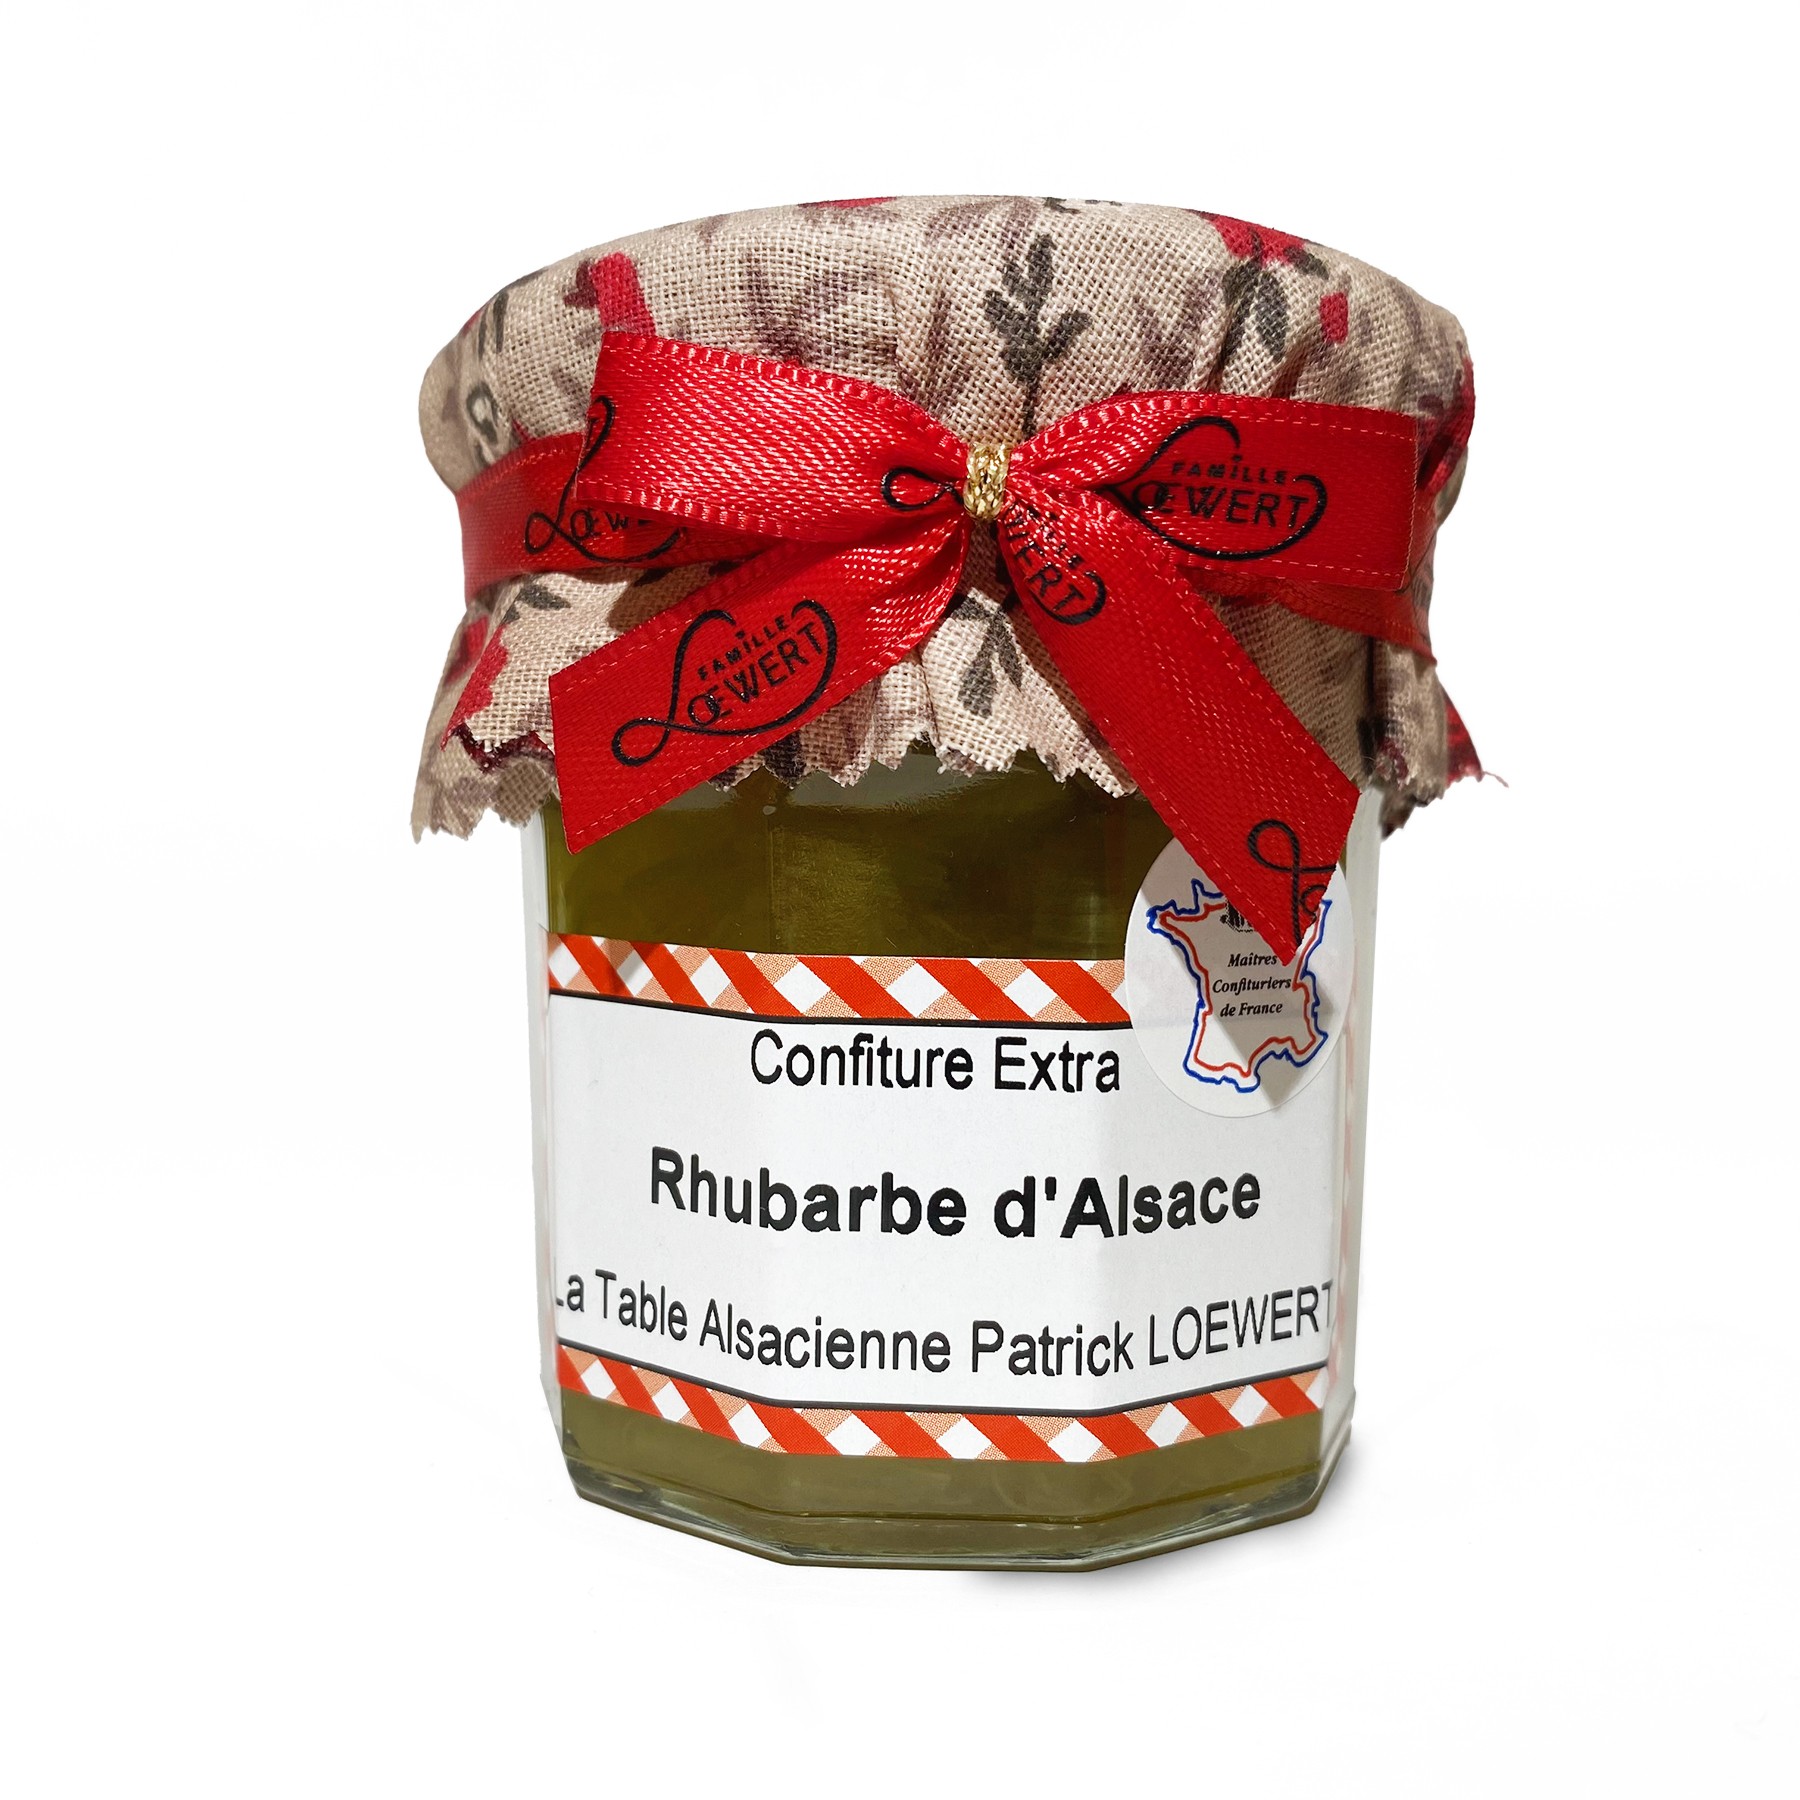 Confiture Rhubarbe d’Alsace